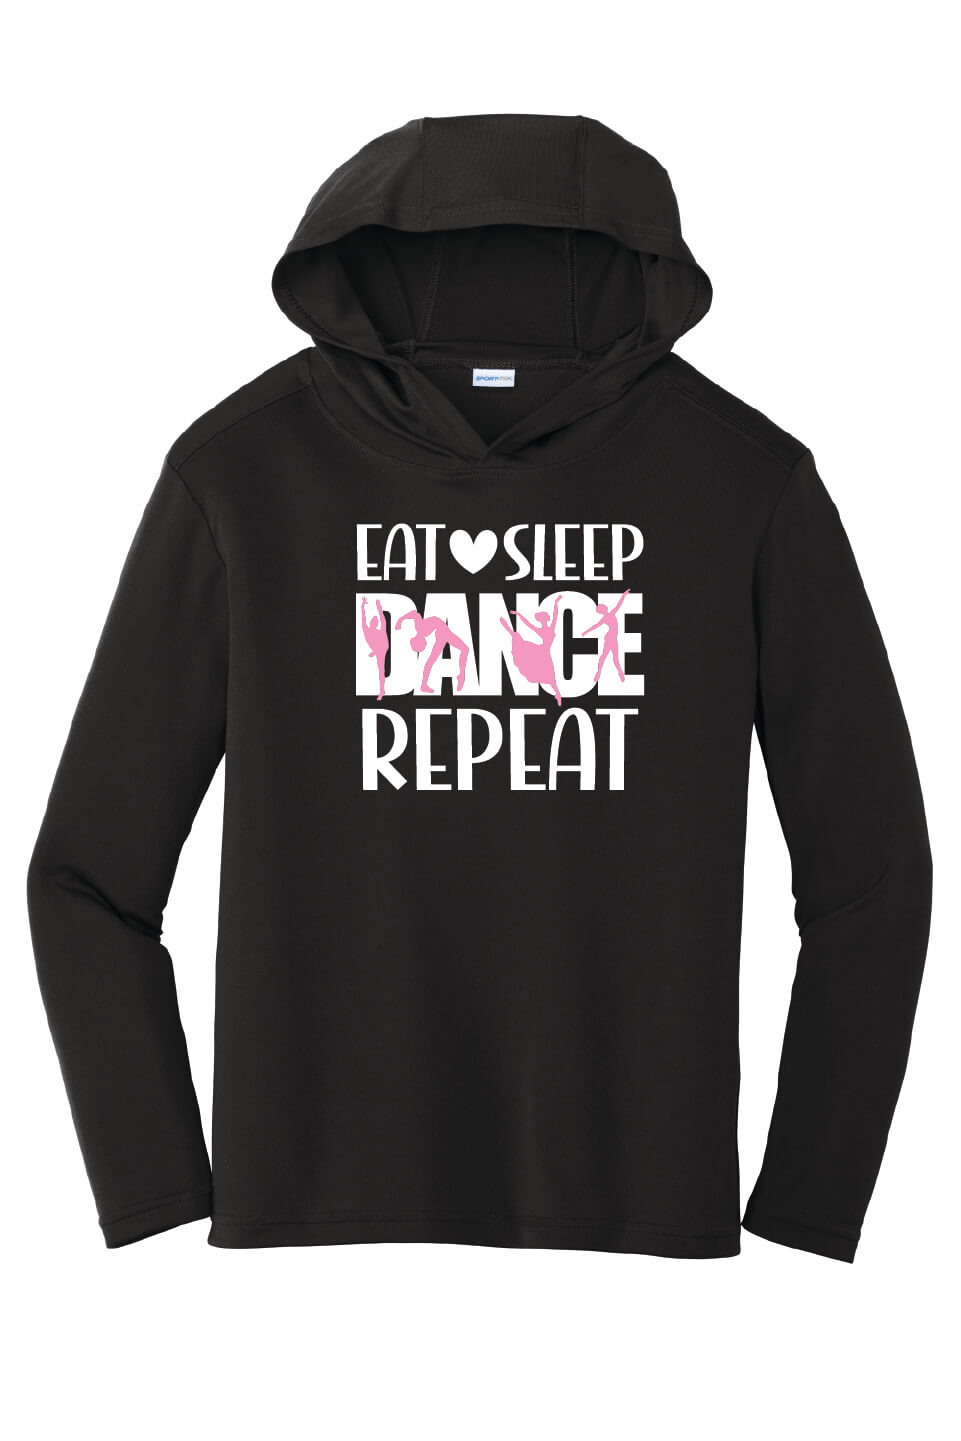 Eat Sleep Dance Repeat Long Sleeve Hooded Pullover (Youth) black